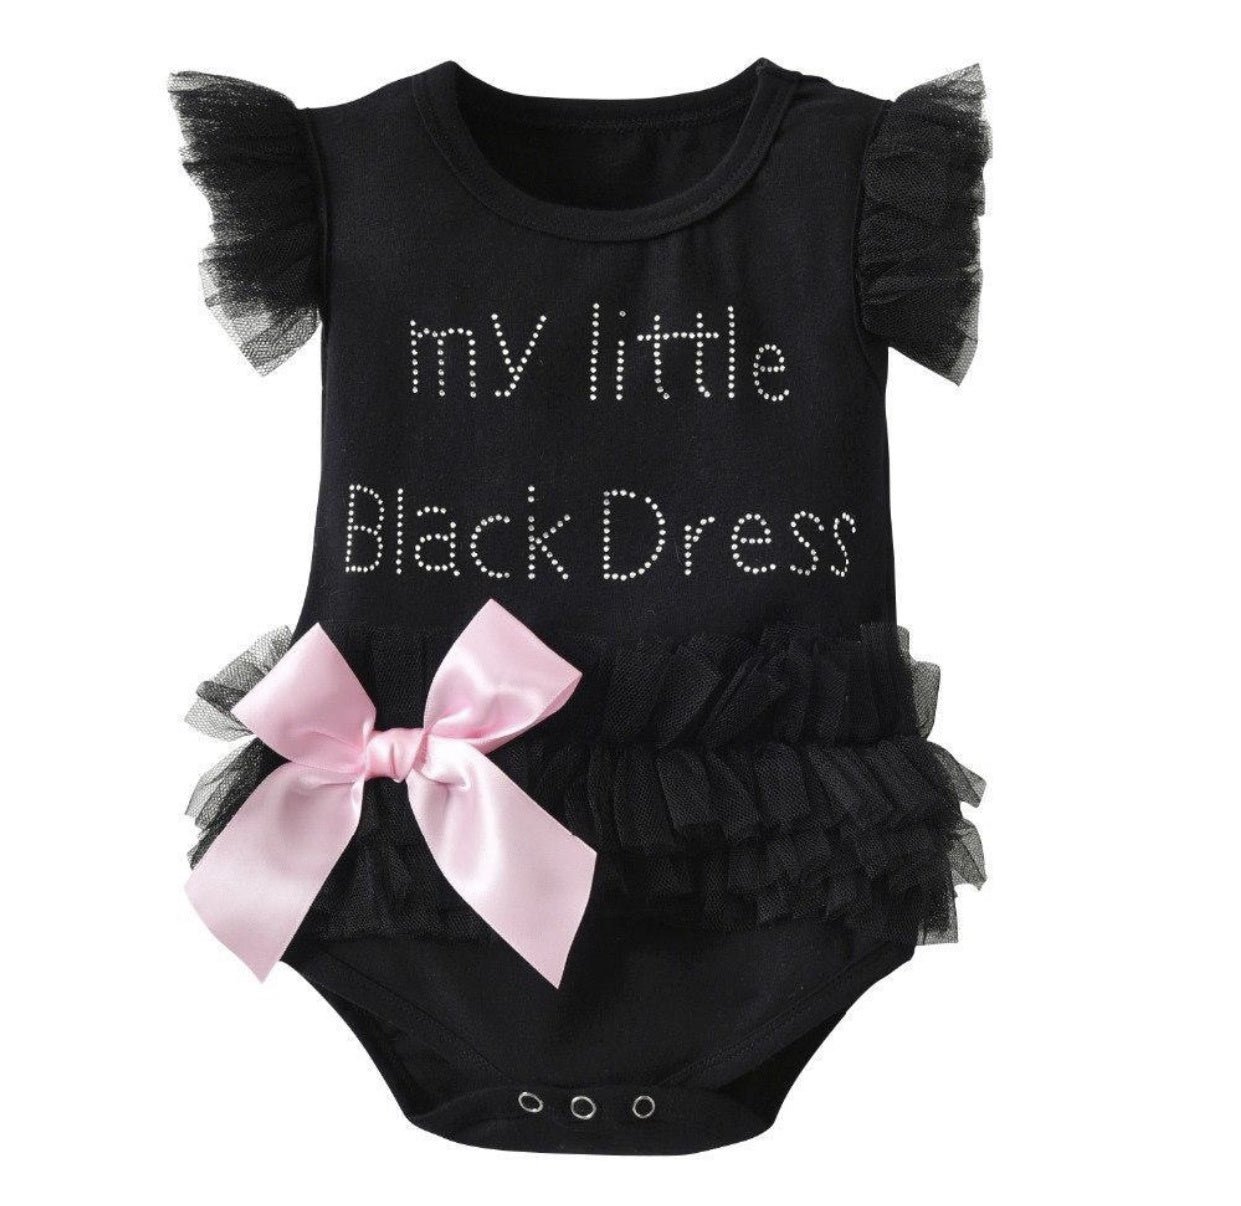 Little Black Dress